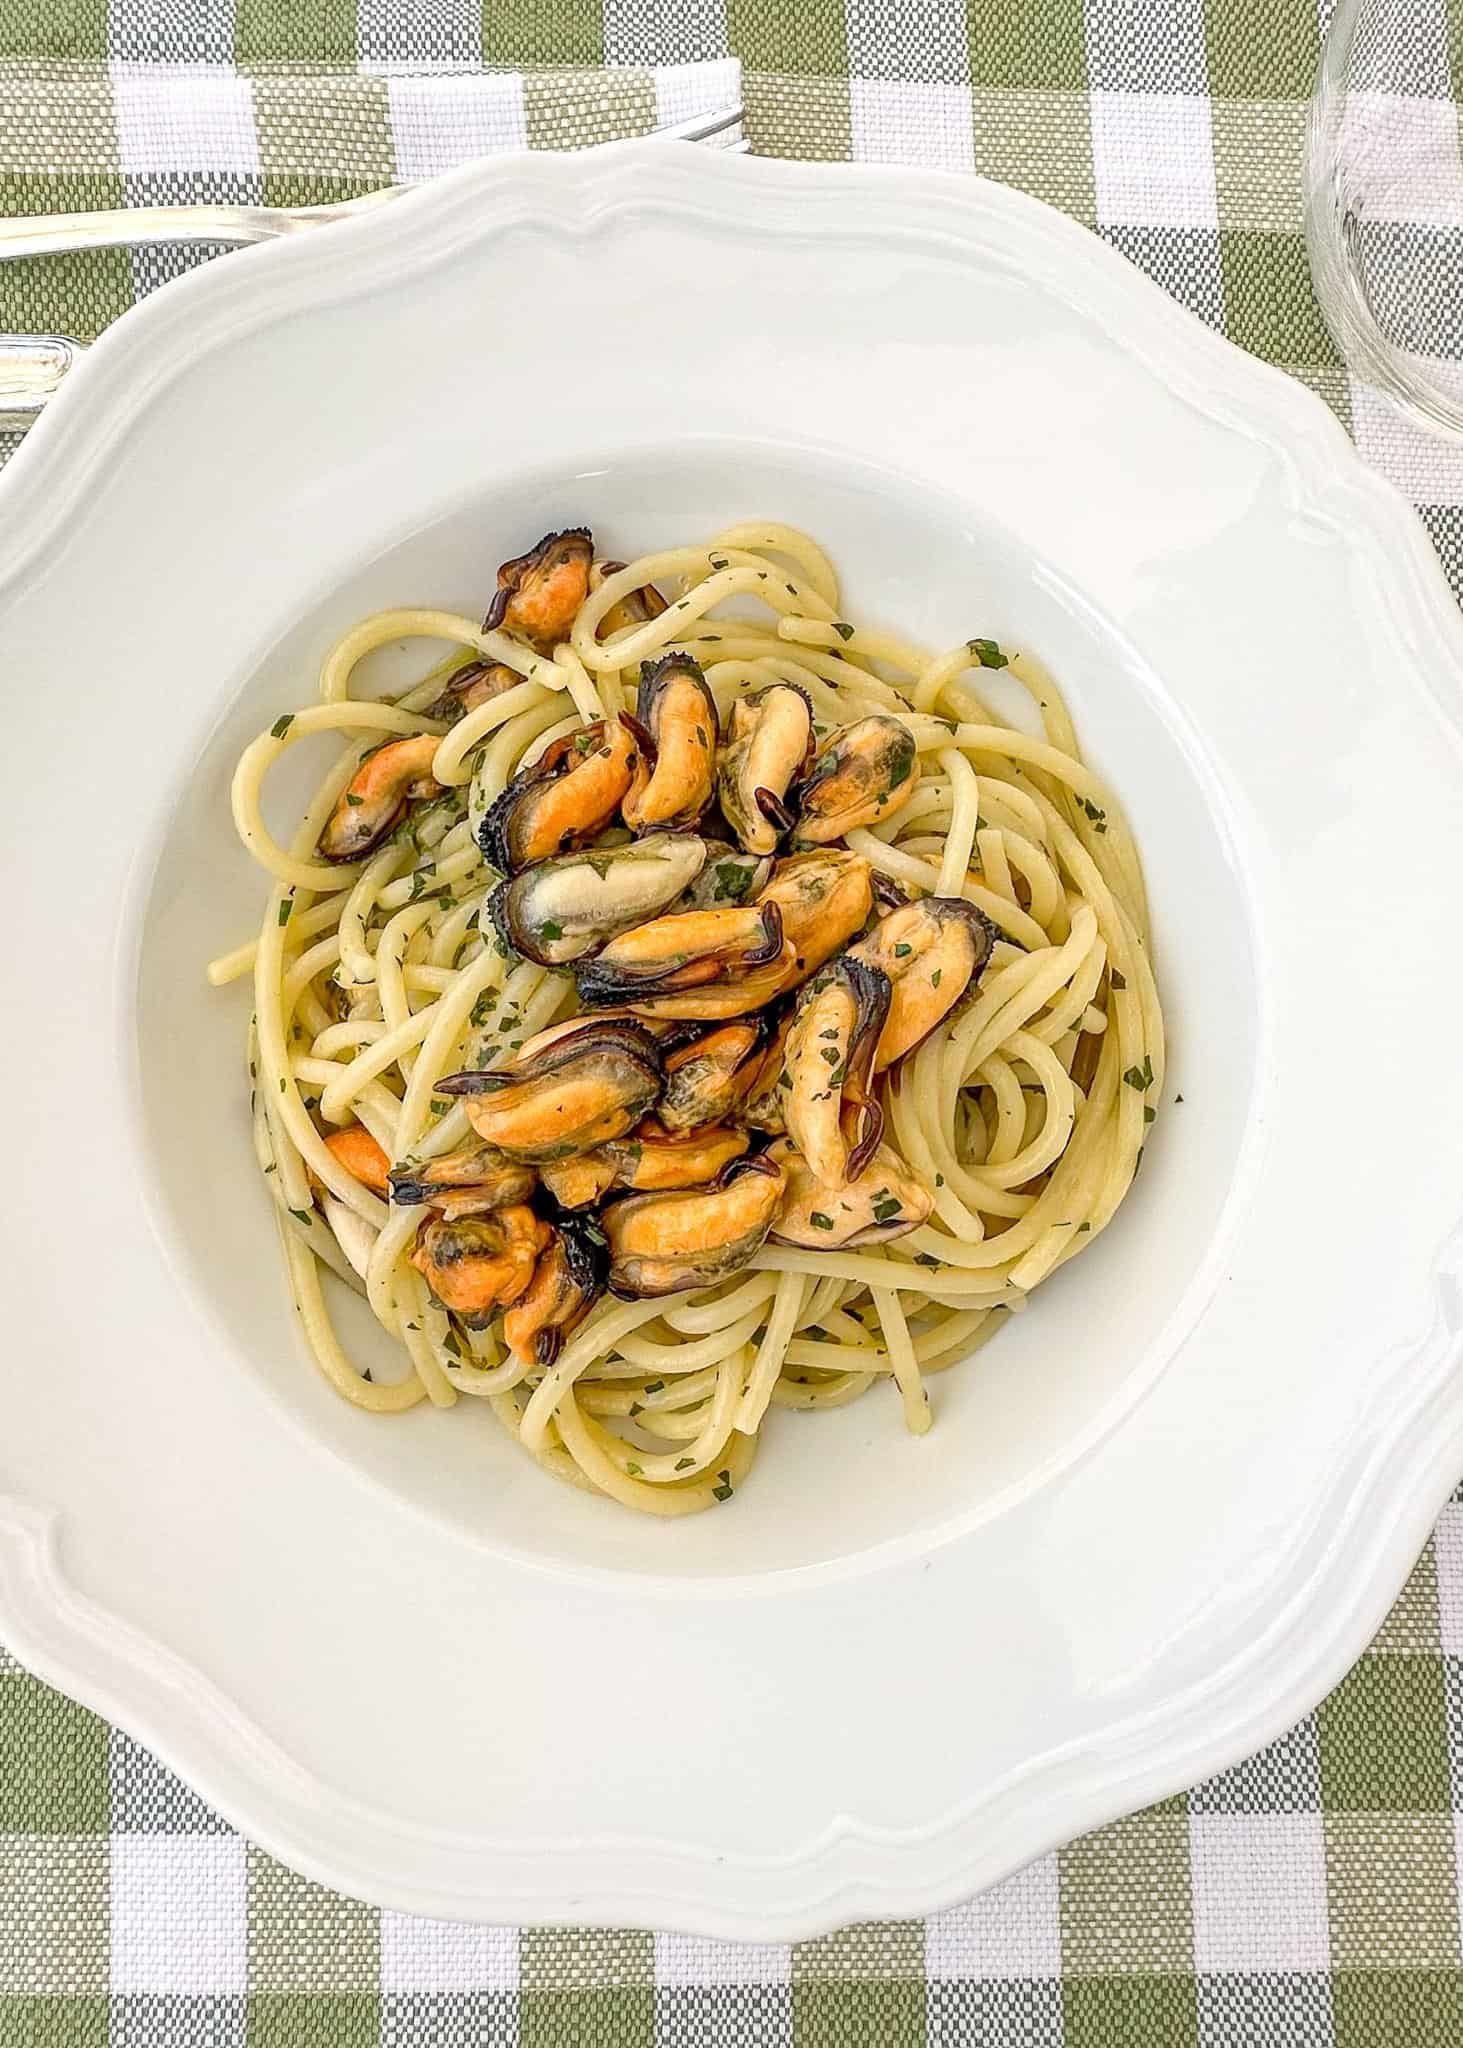 spagehetti with mussels puglia